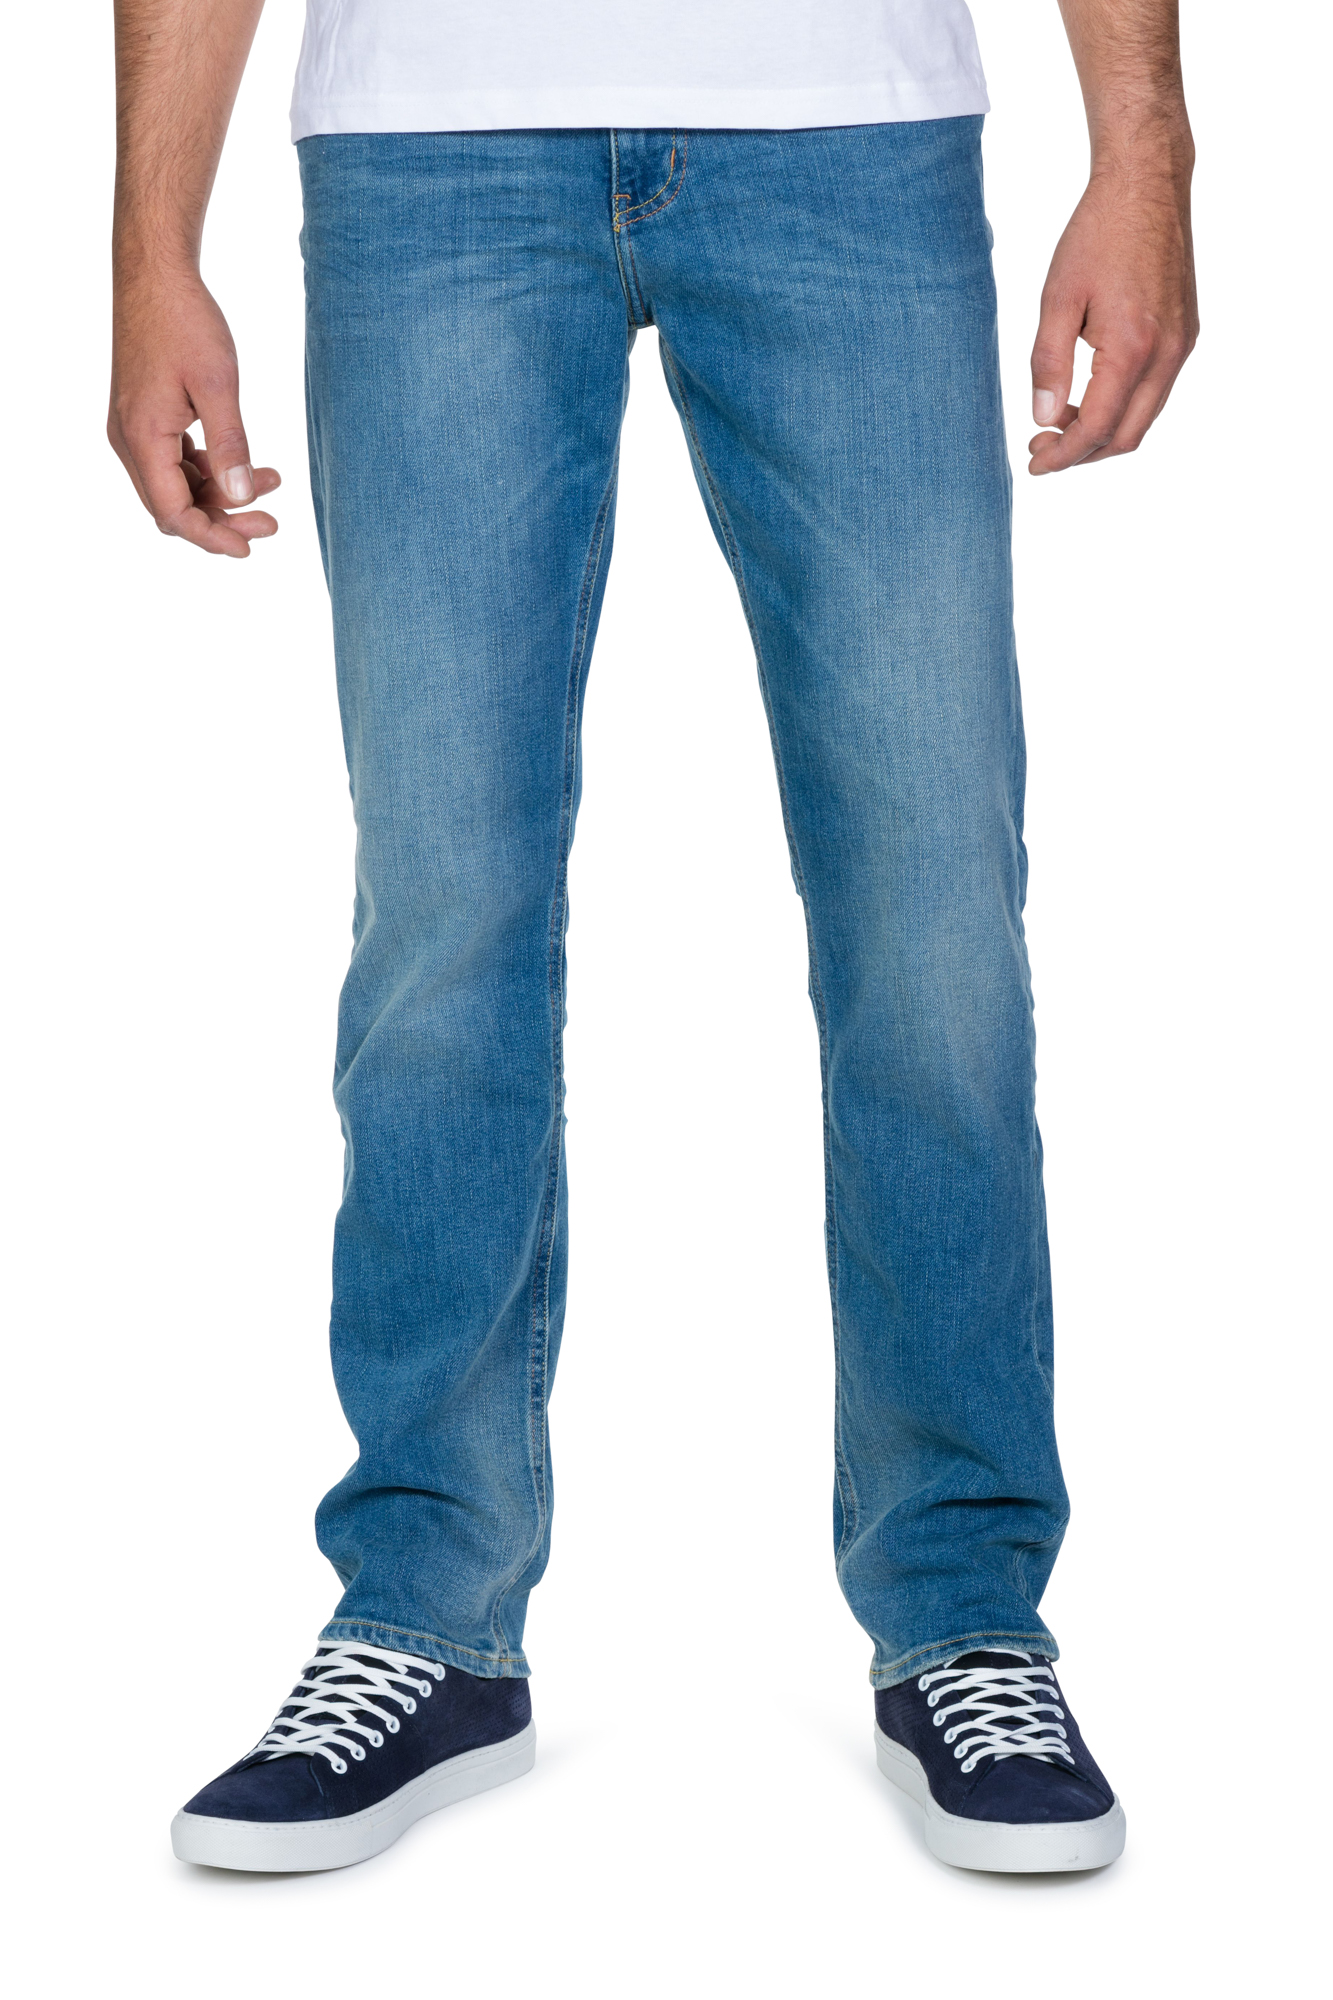 jeans_homme_redman_noah_denim_stone_used_1.jpg